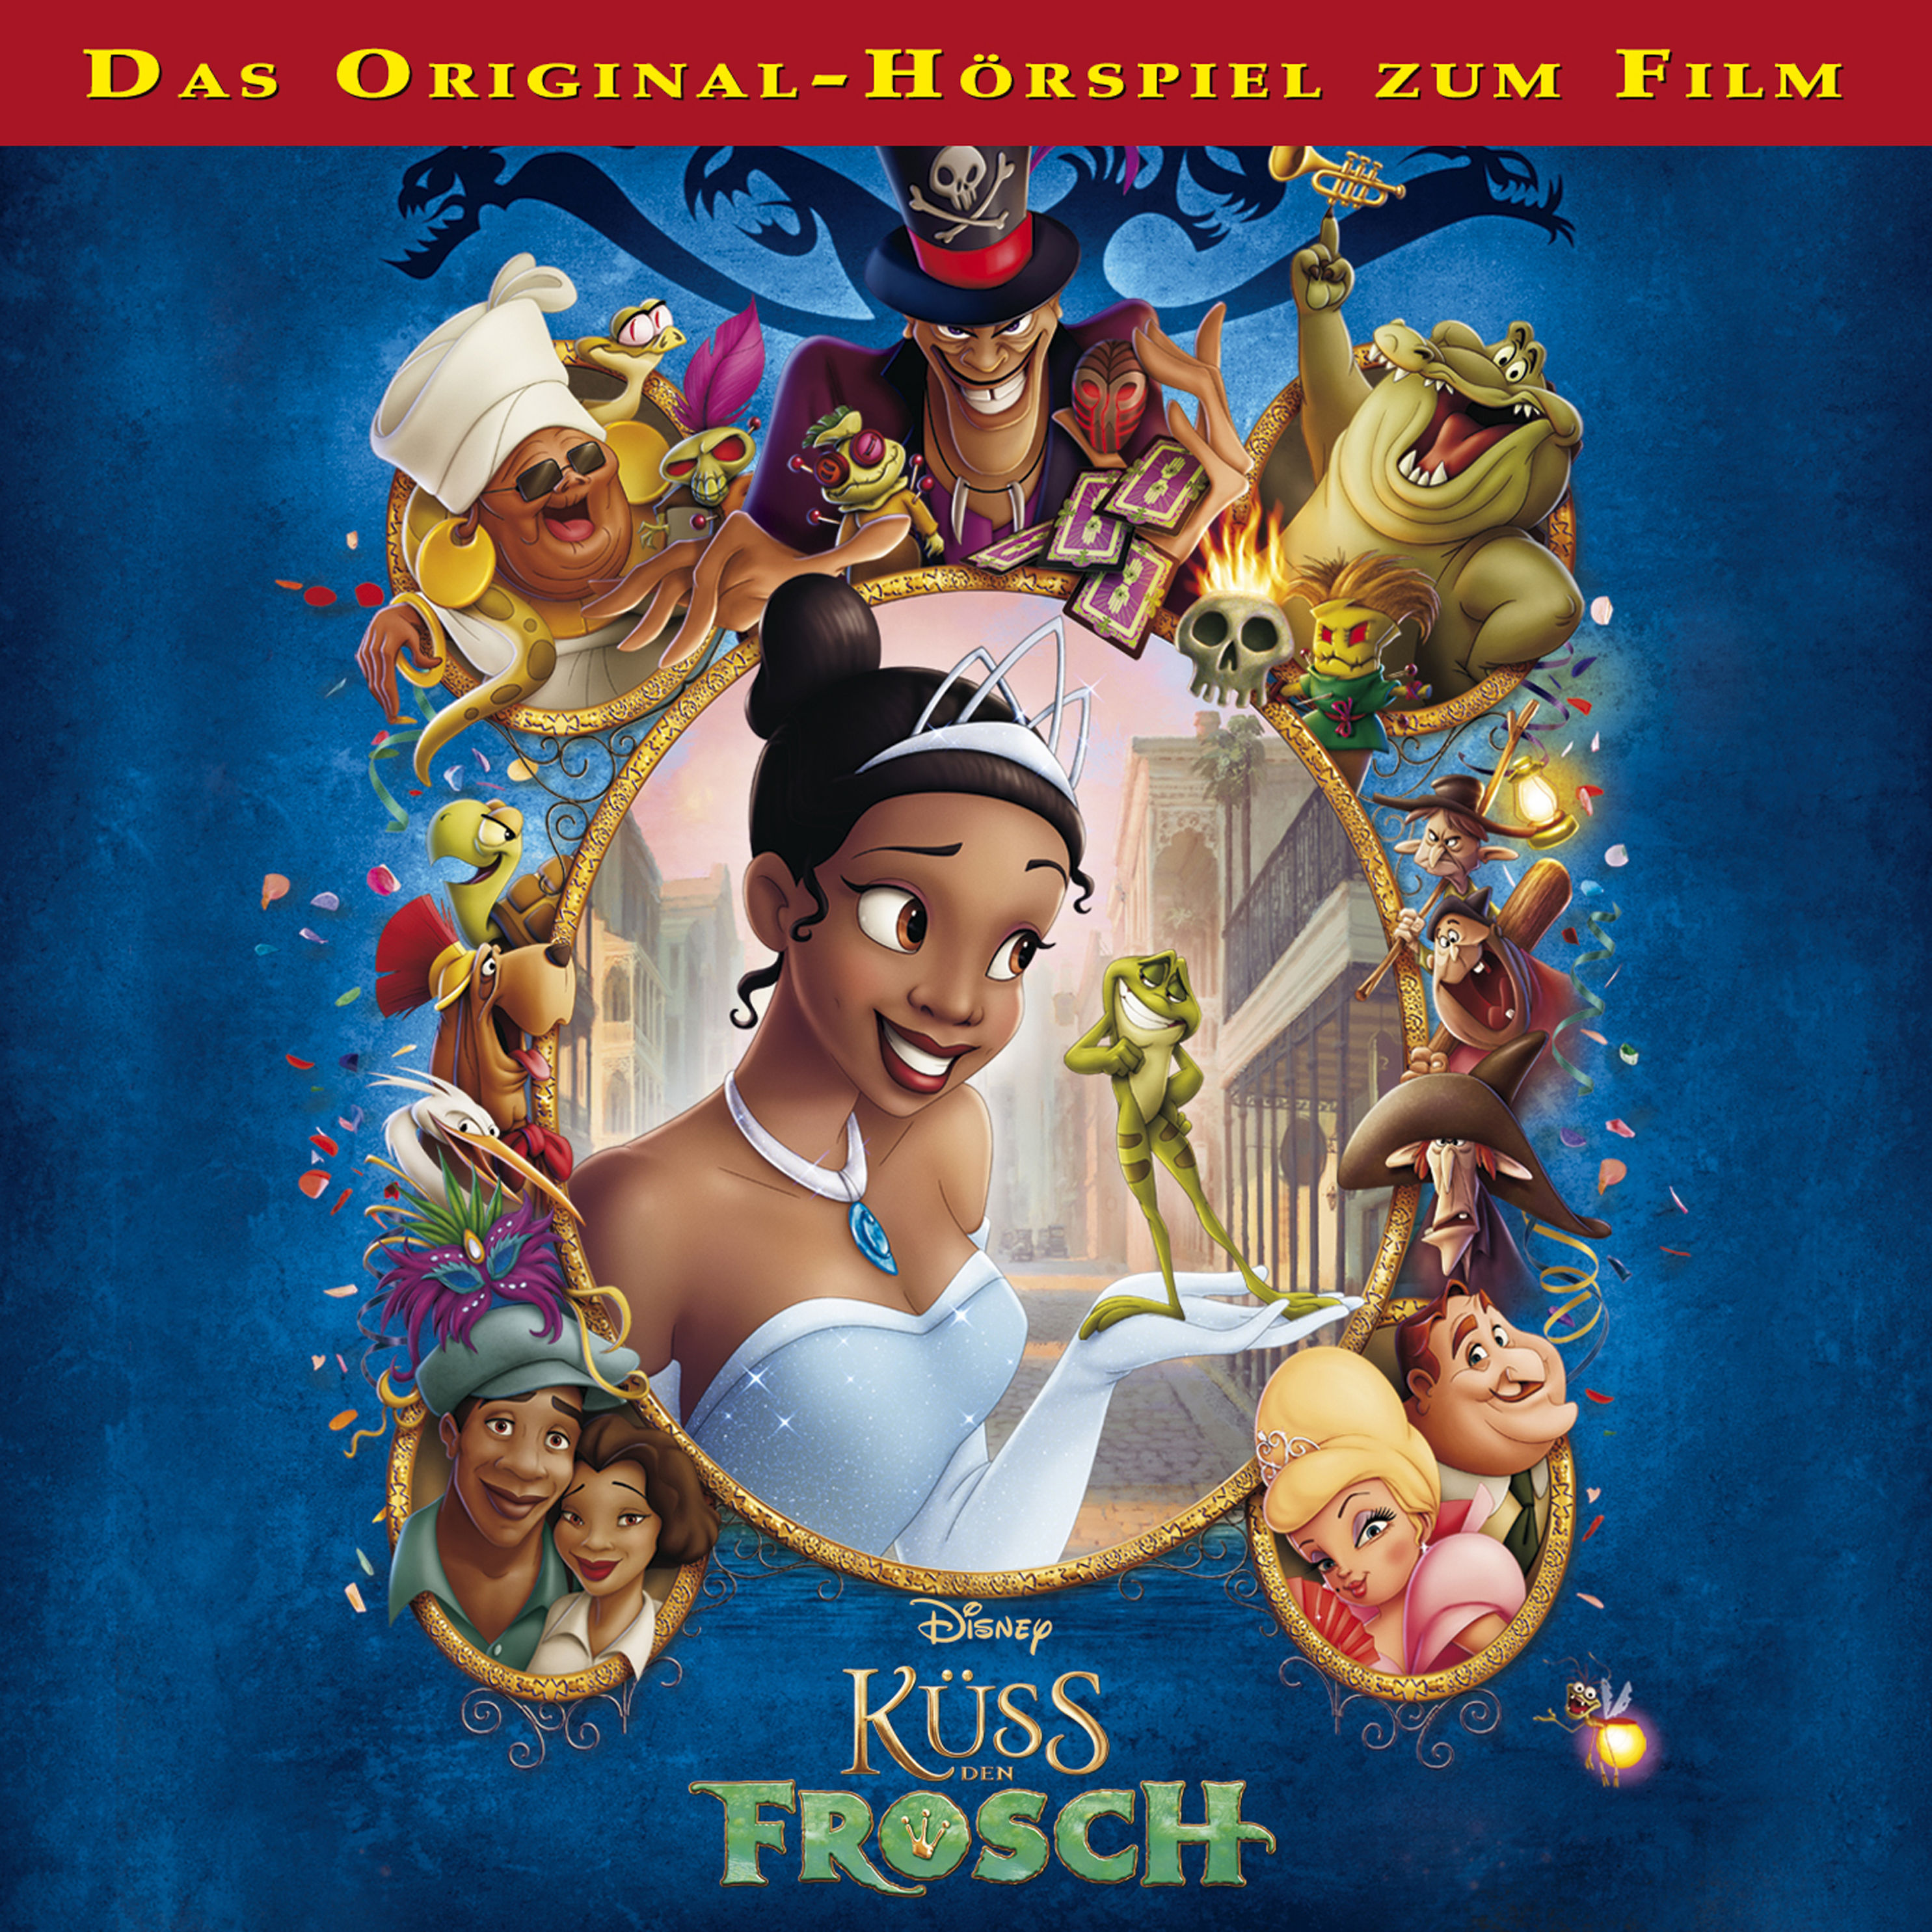 Disney - Küss den Frosch Hörbuch downloaden bei Weltbild.at